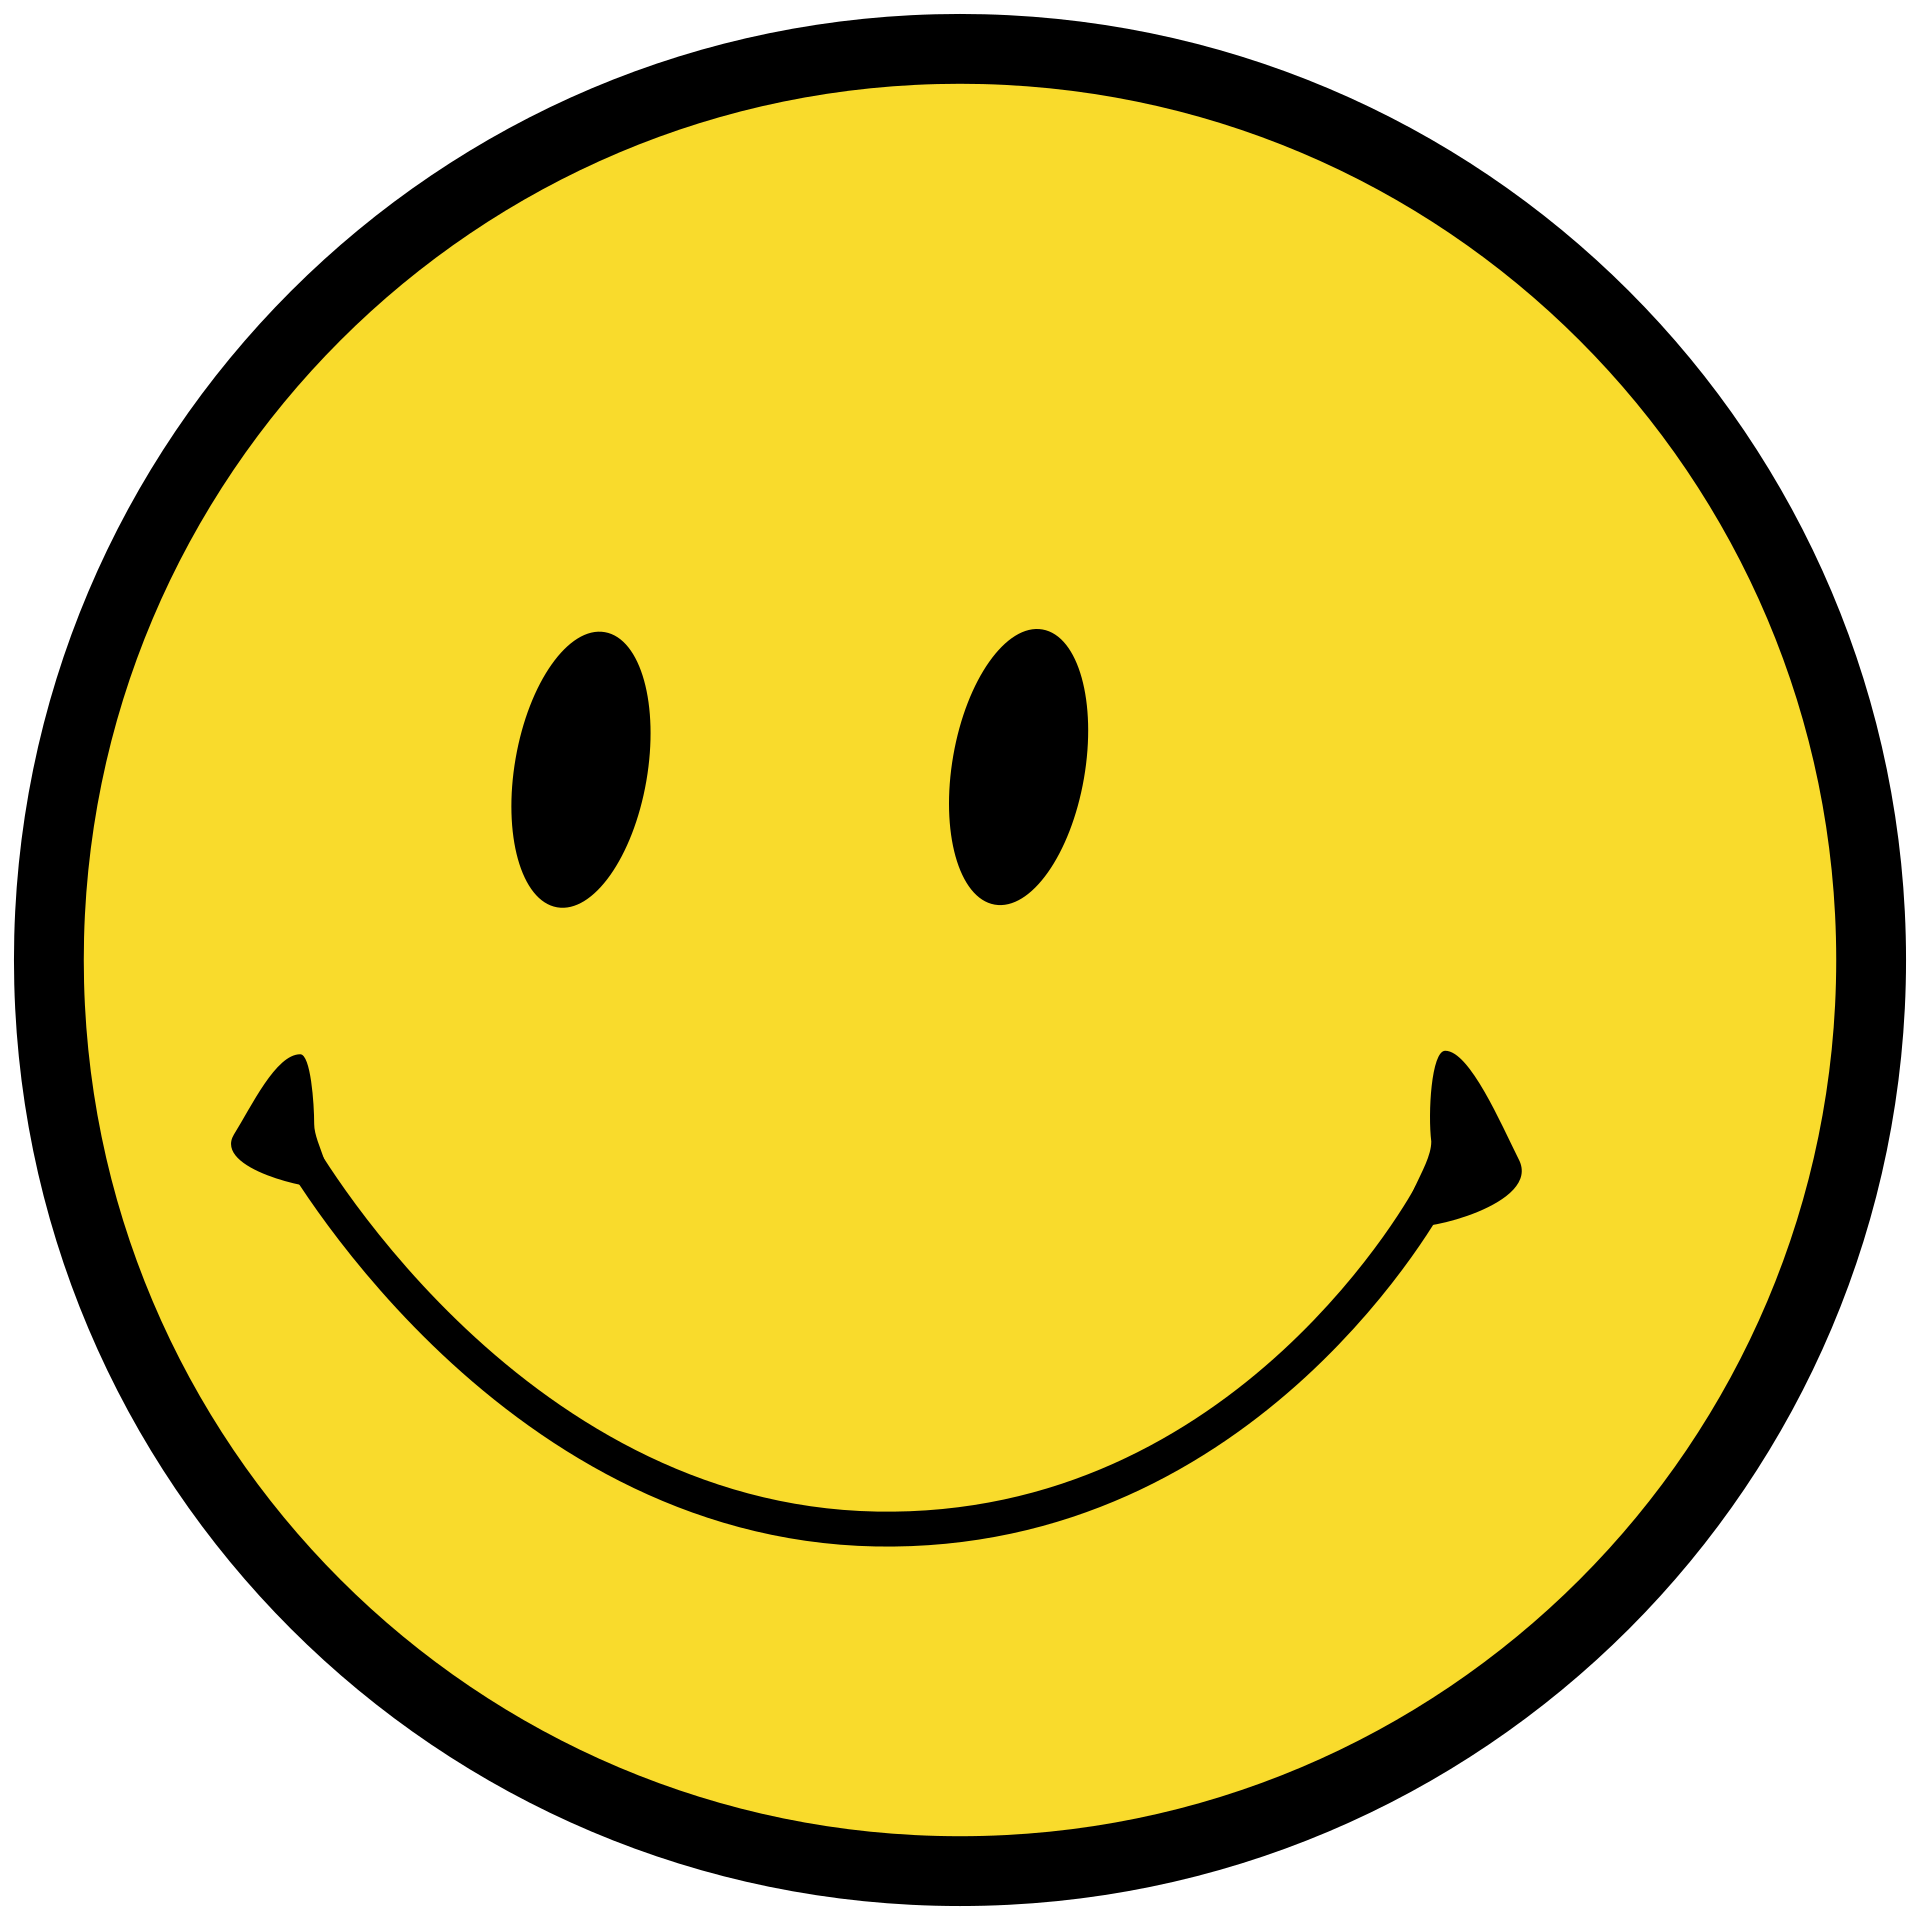 A smiley face emoji